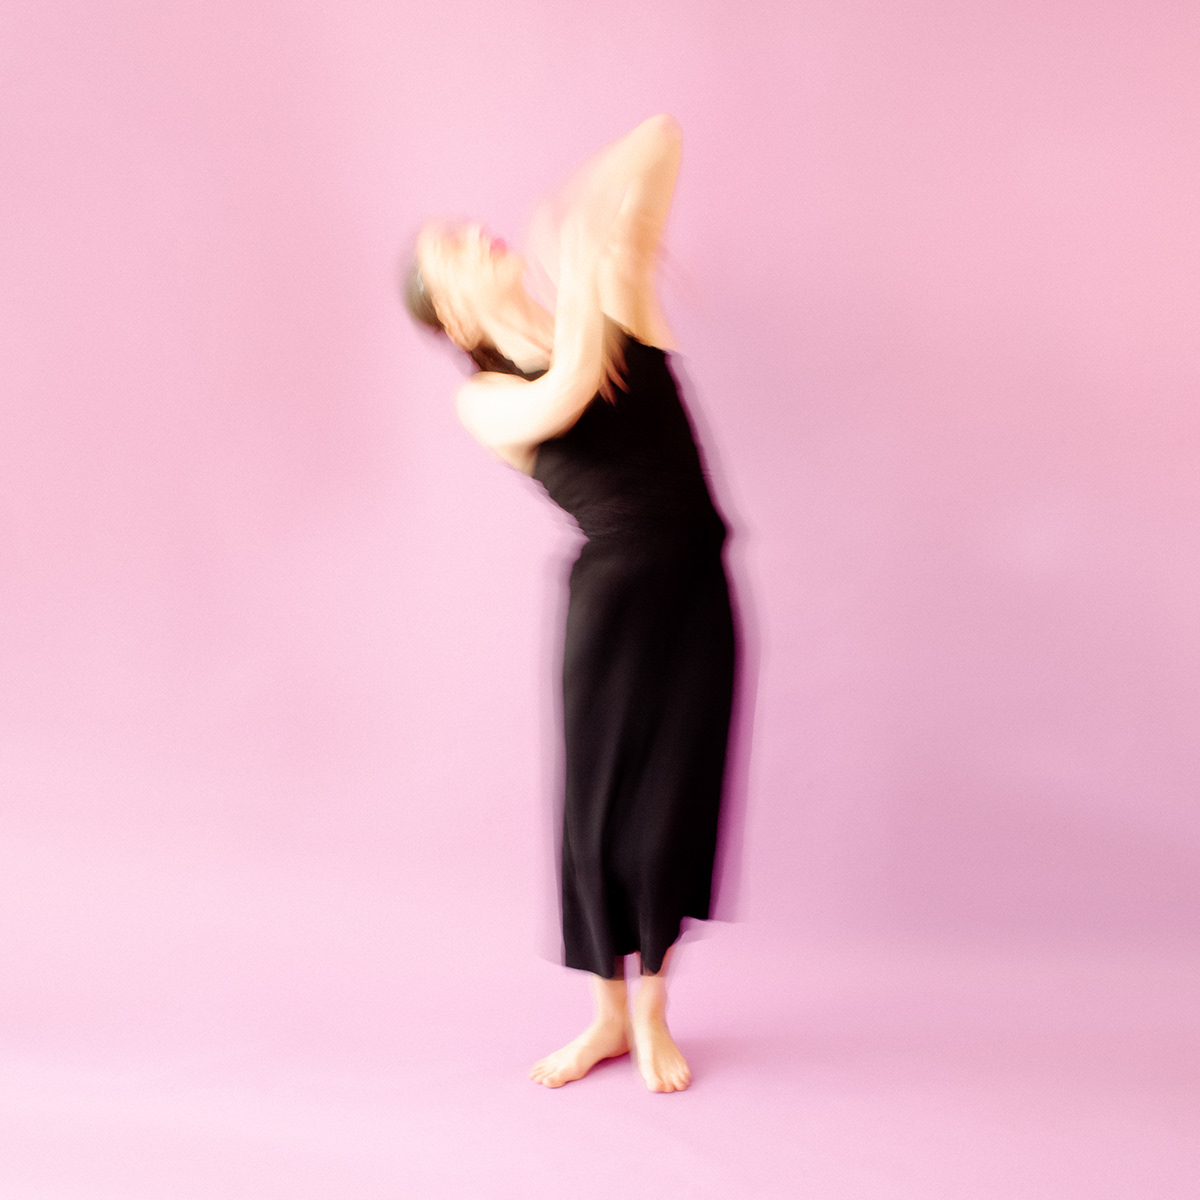 artwork beauty blurred Blurry DANCE   danse movement painting   portrait woman